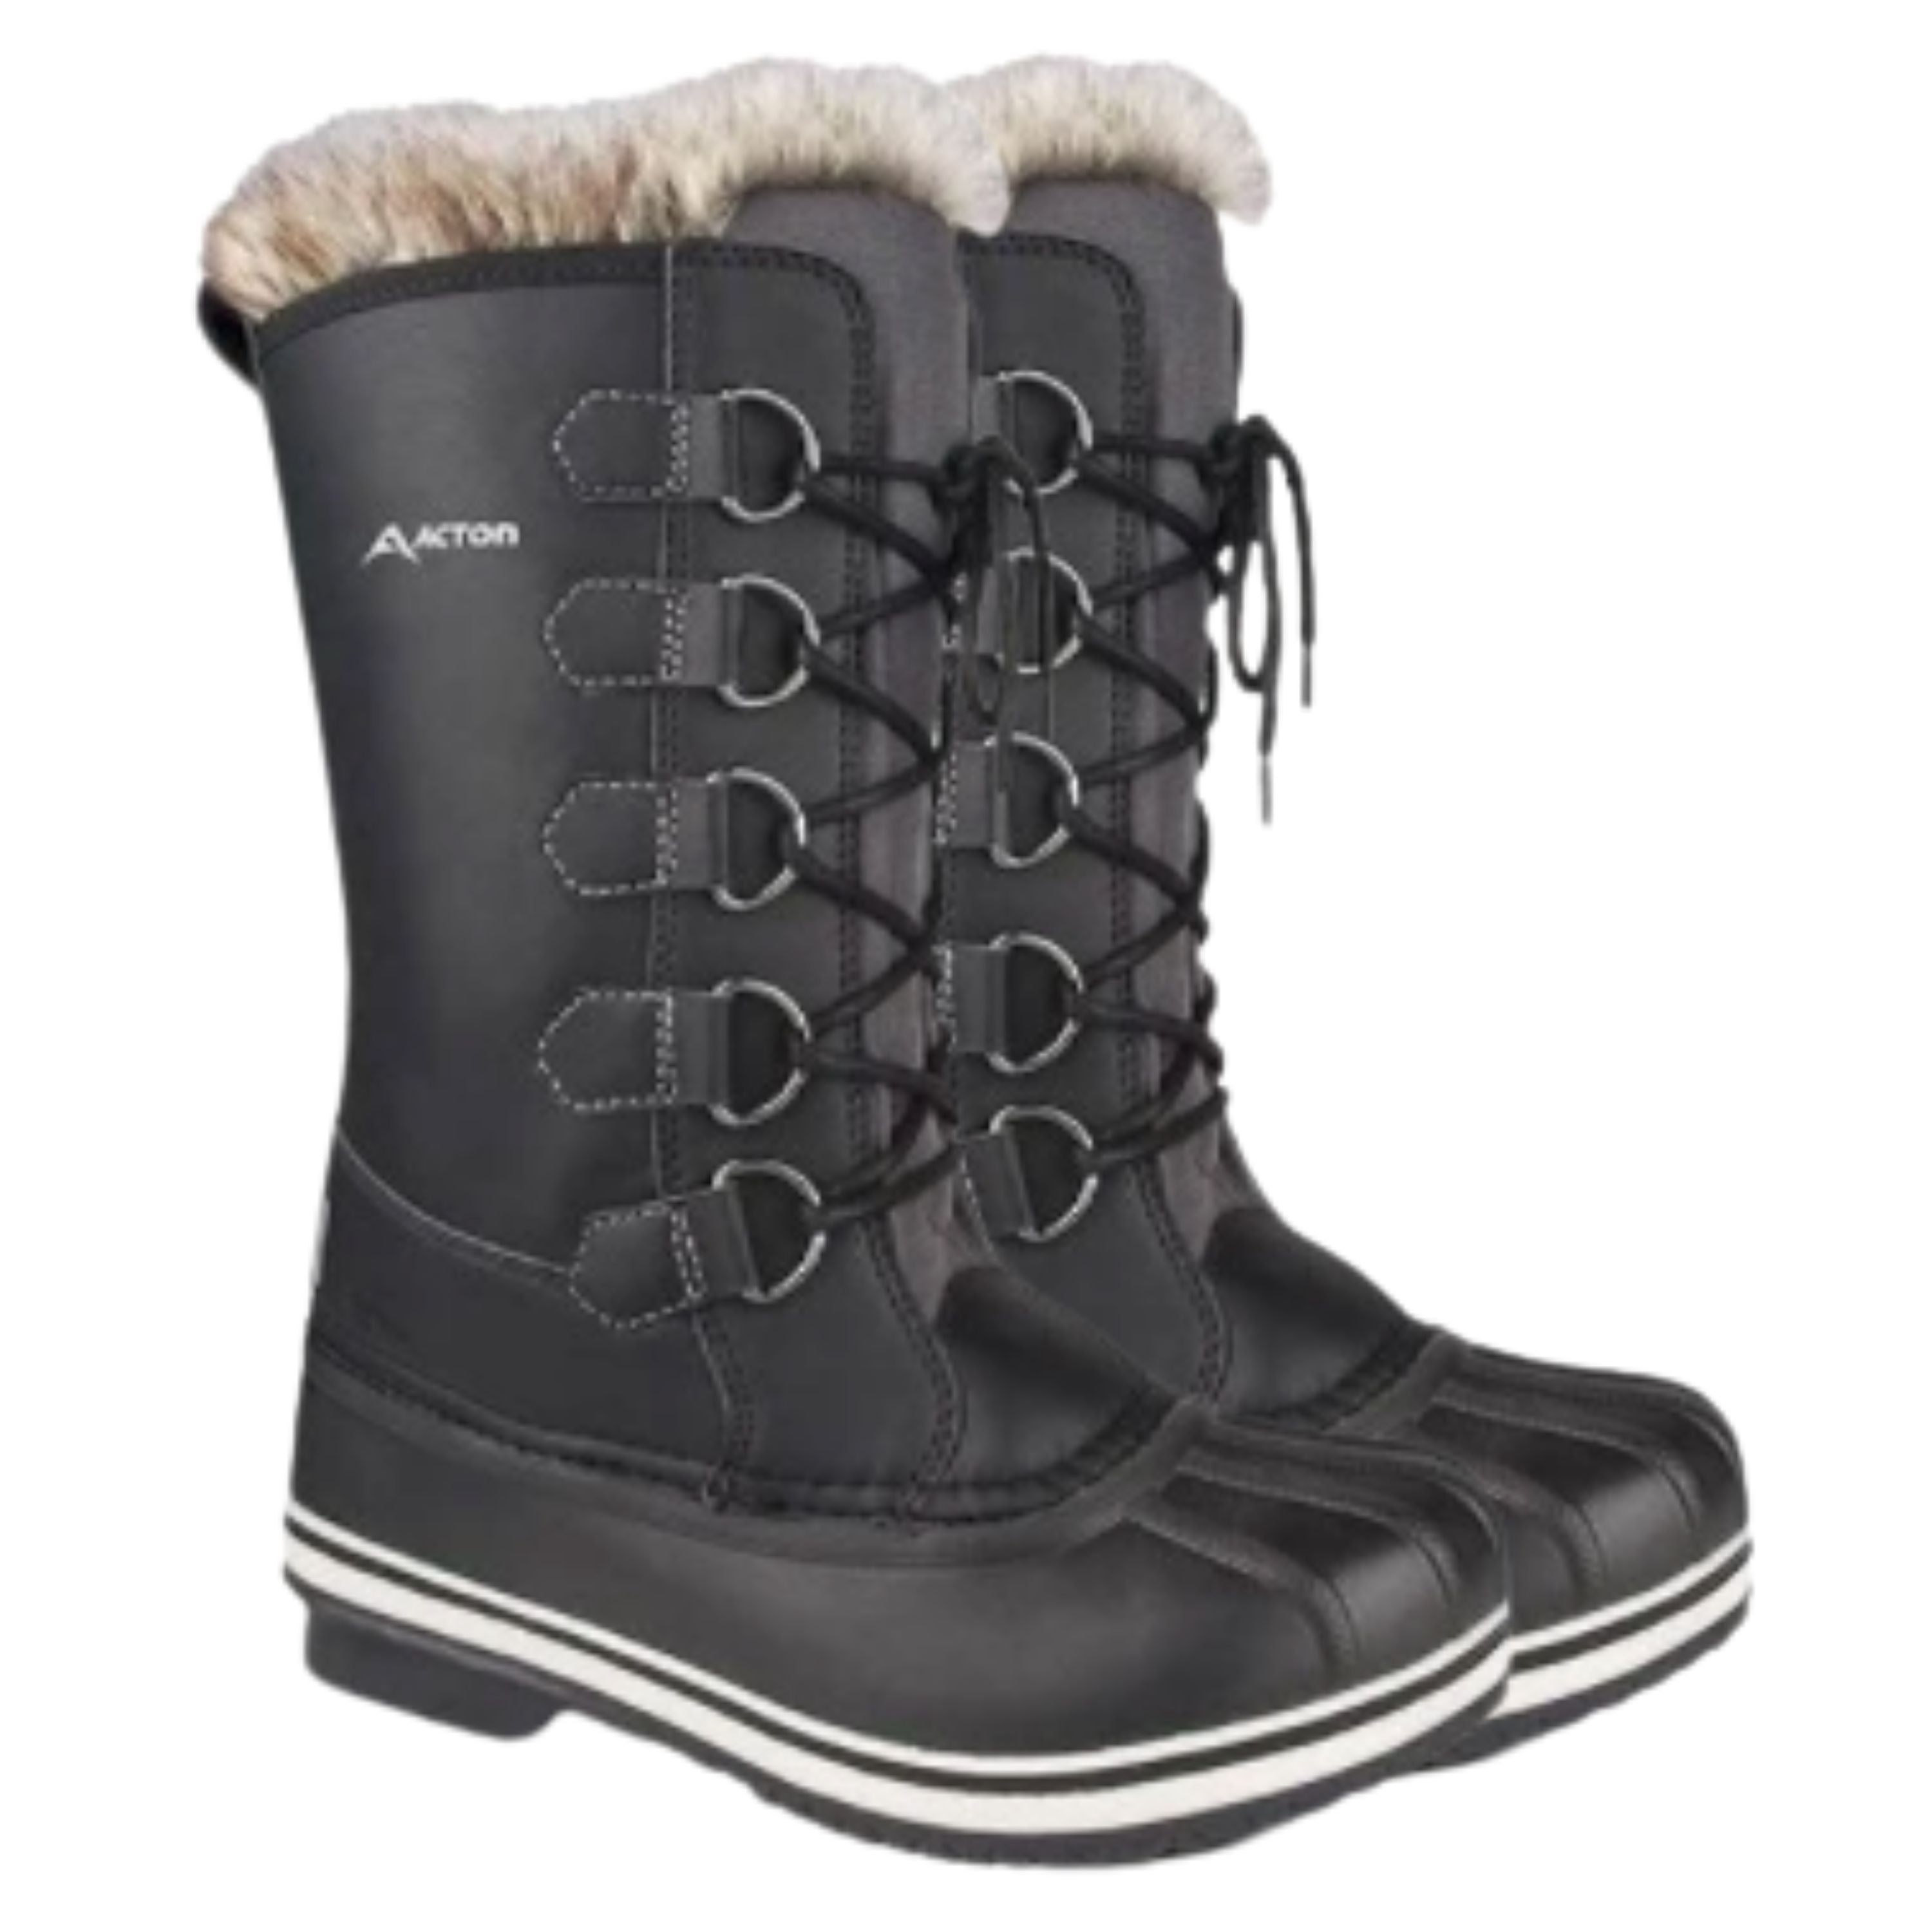 "Corinne" Winter boots - Women’s